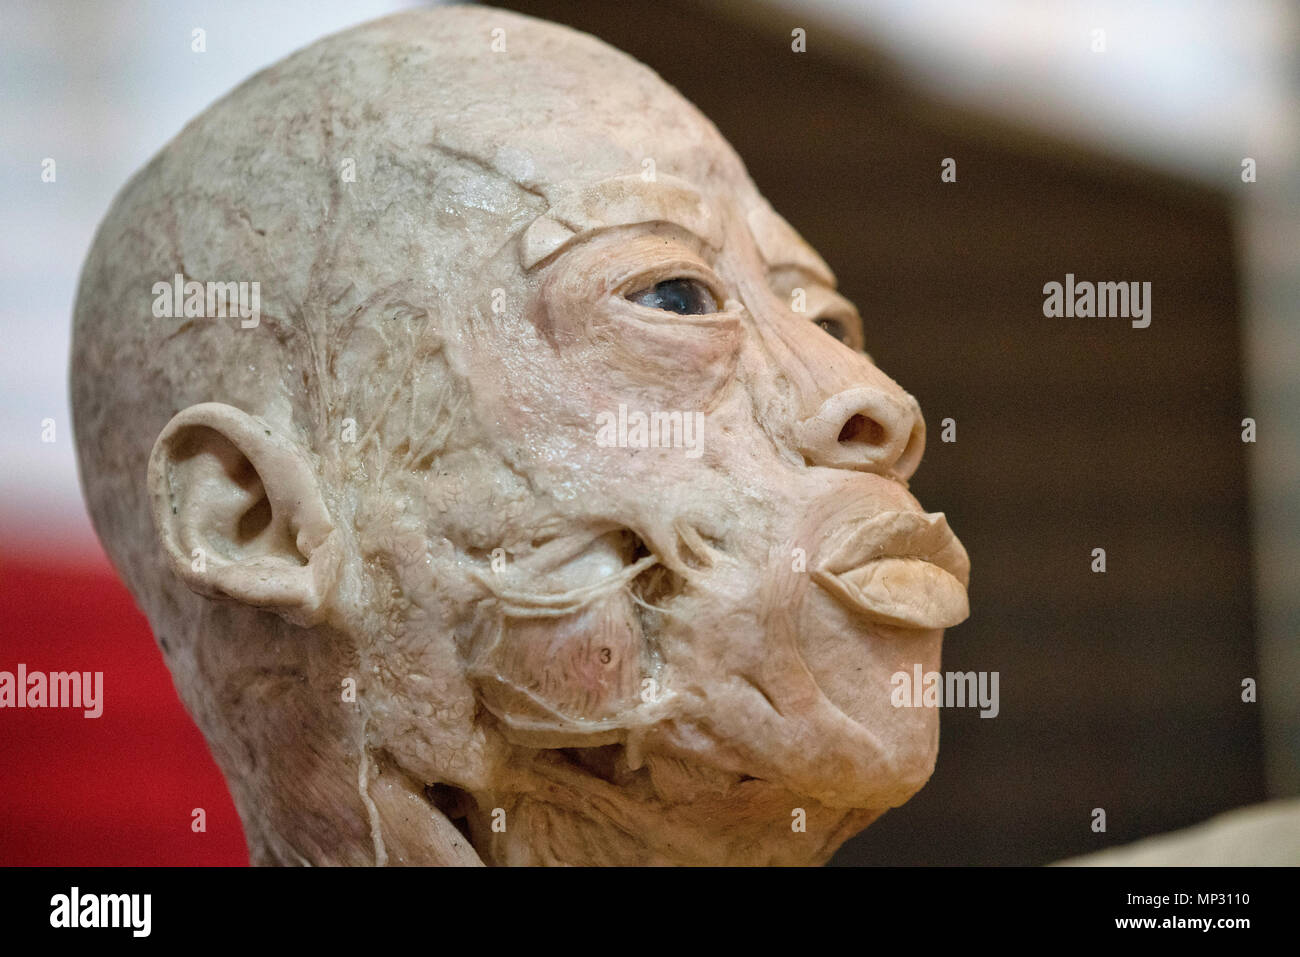 Anatomy of a real human head Stock Photo